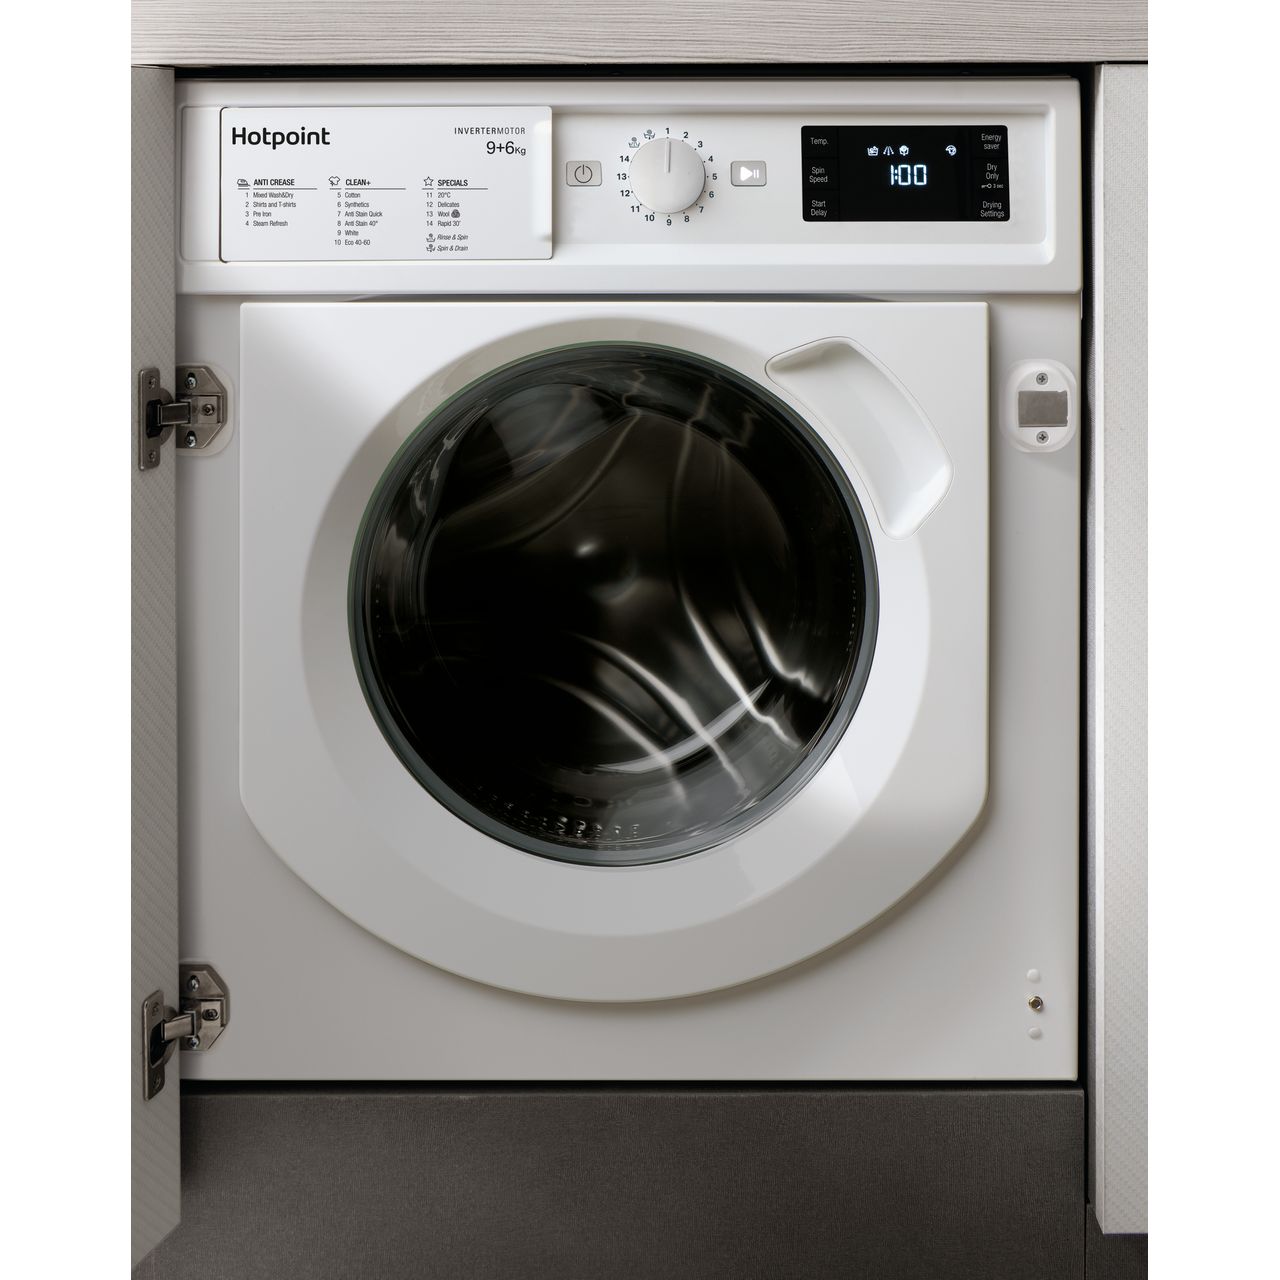 BIWDHG961484UK | Hotpoint Washer Dryer | White | ao.com